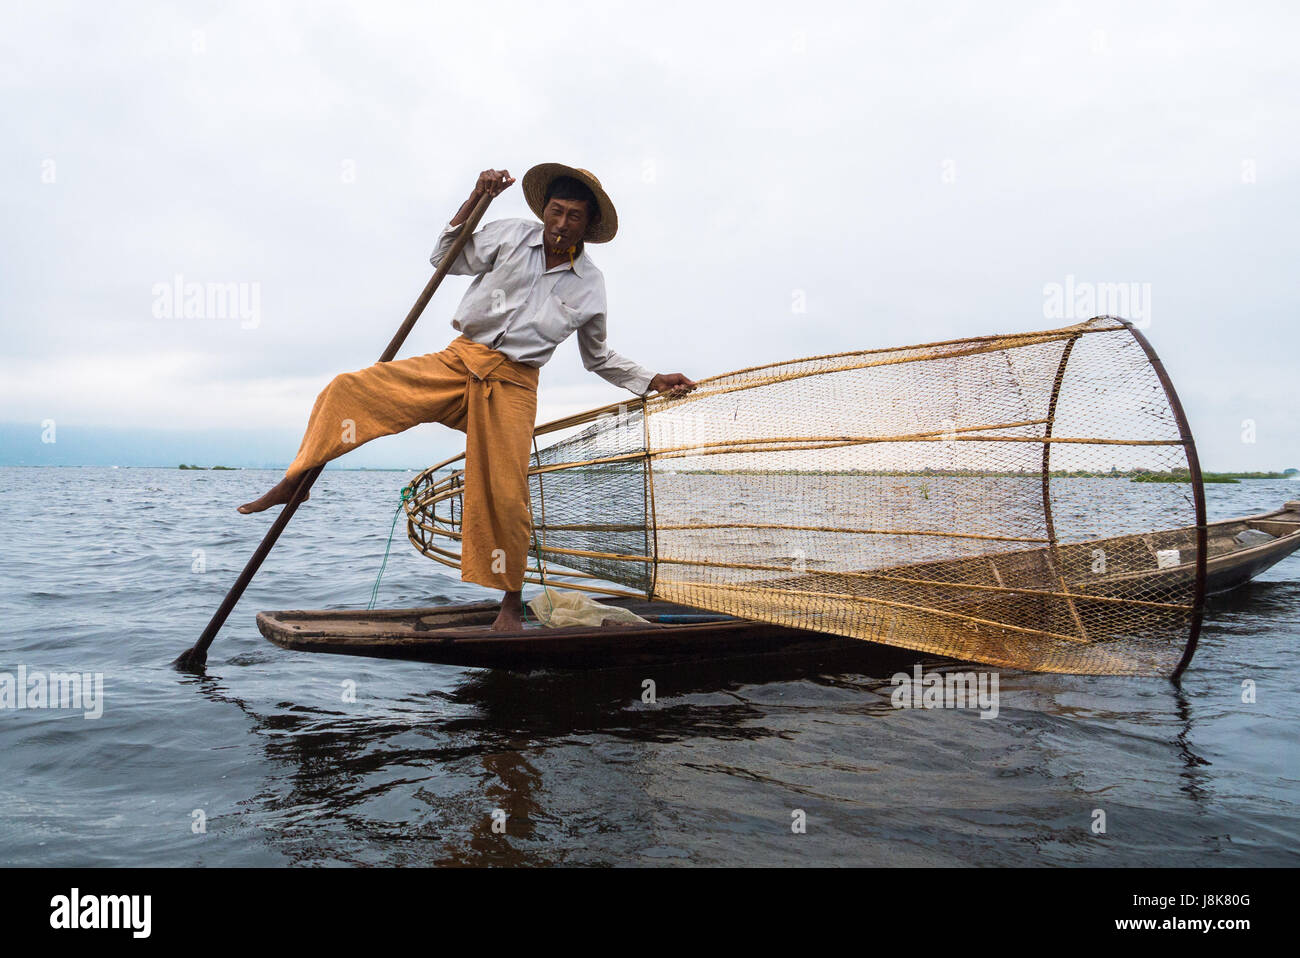 The one leg rower fisherman of Inle Lake, Myanmar. Stock Photo